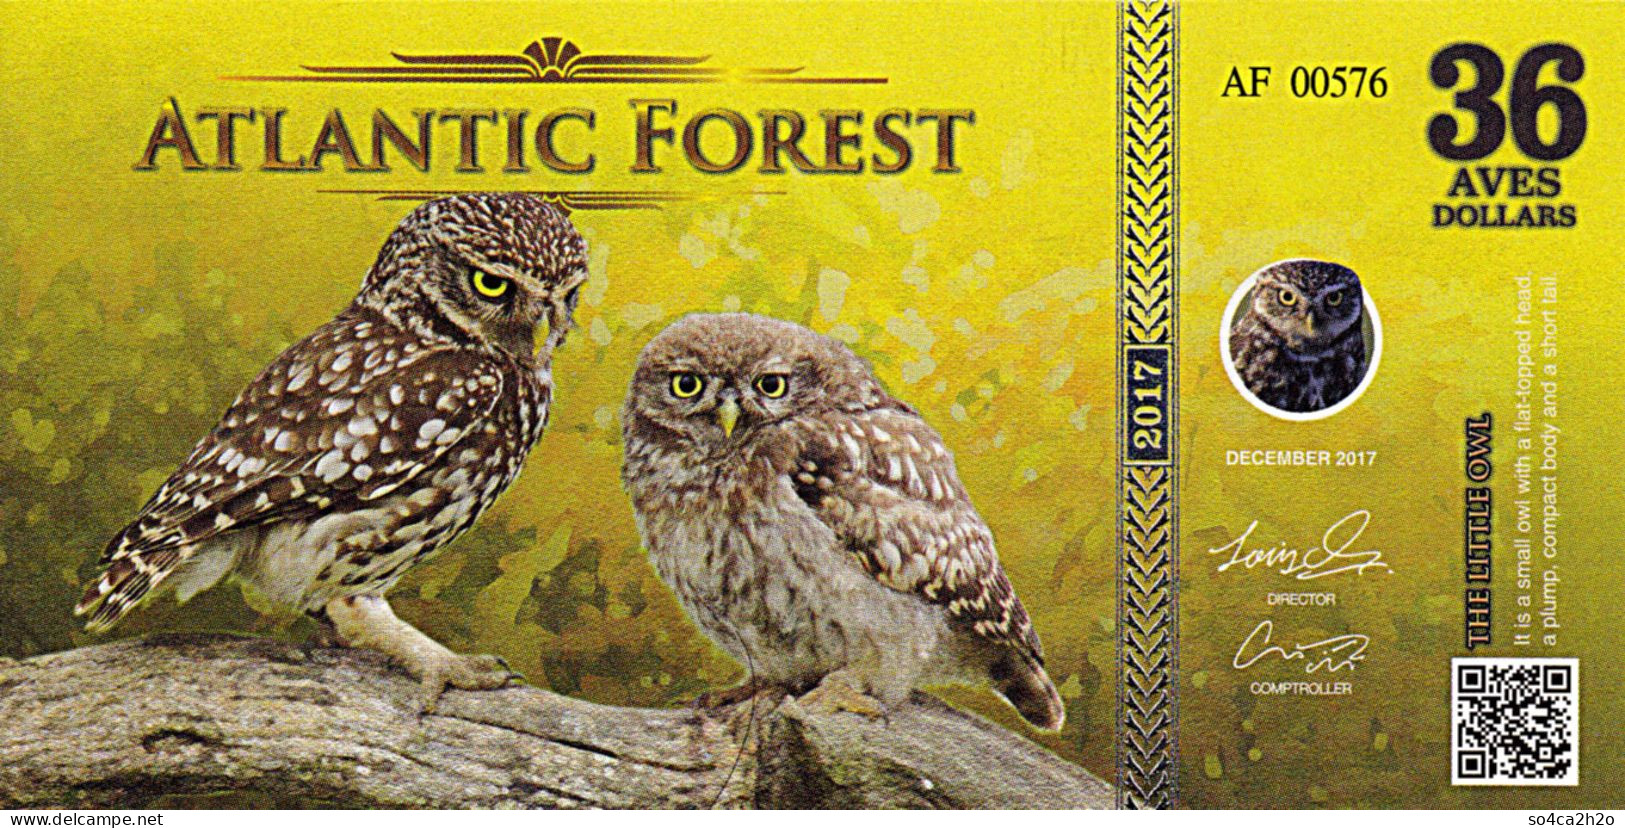 Atlantic Forest 36 Aves Dollars UNC 2017 Chouette Athena - Ficción & Especímenes